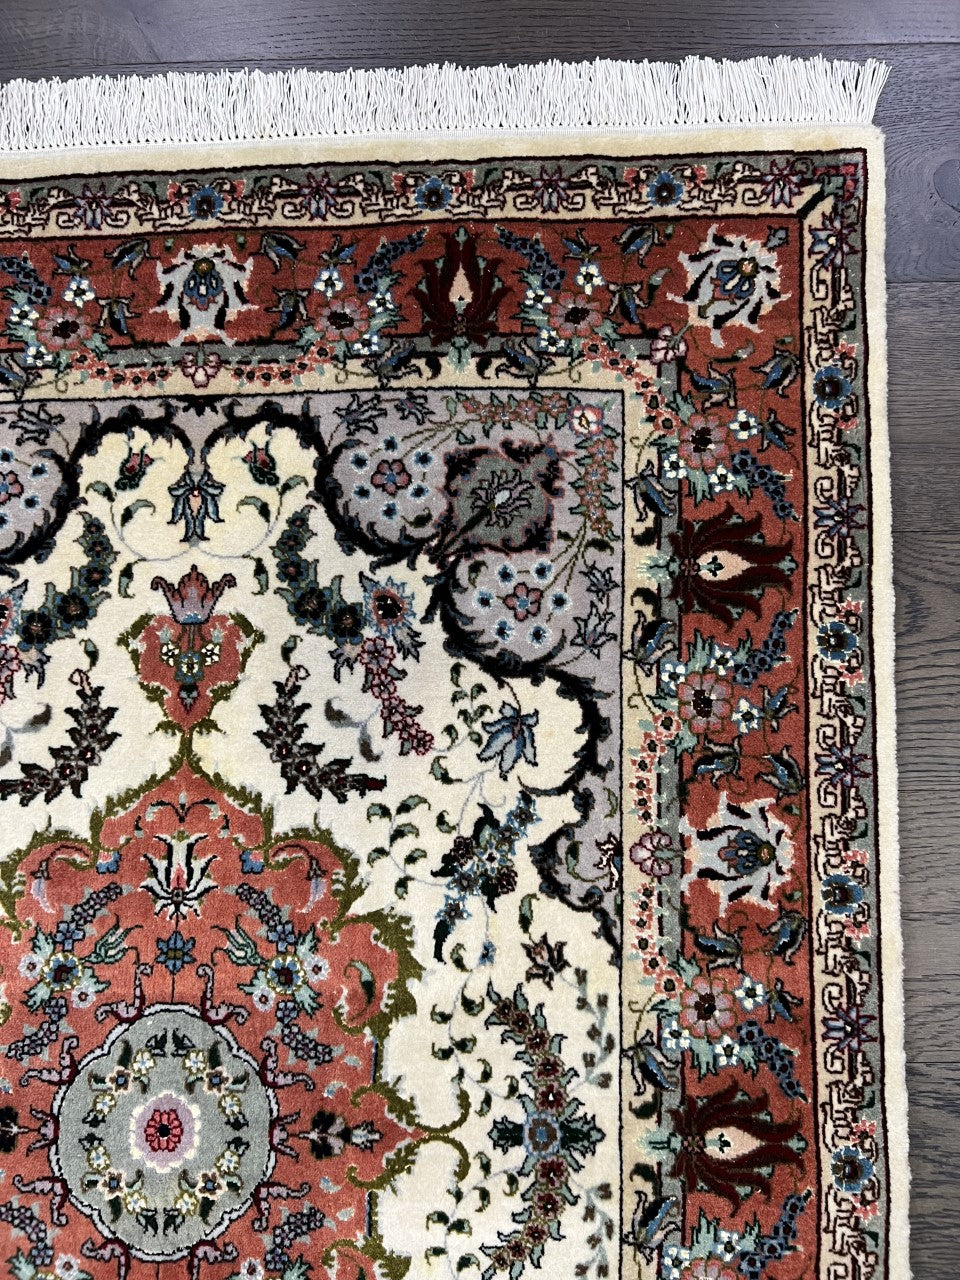 Stunning vintage Handmade Tabriiz rug